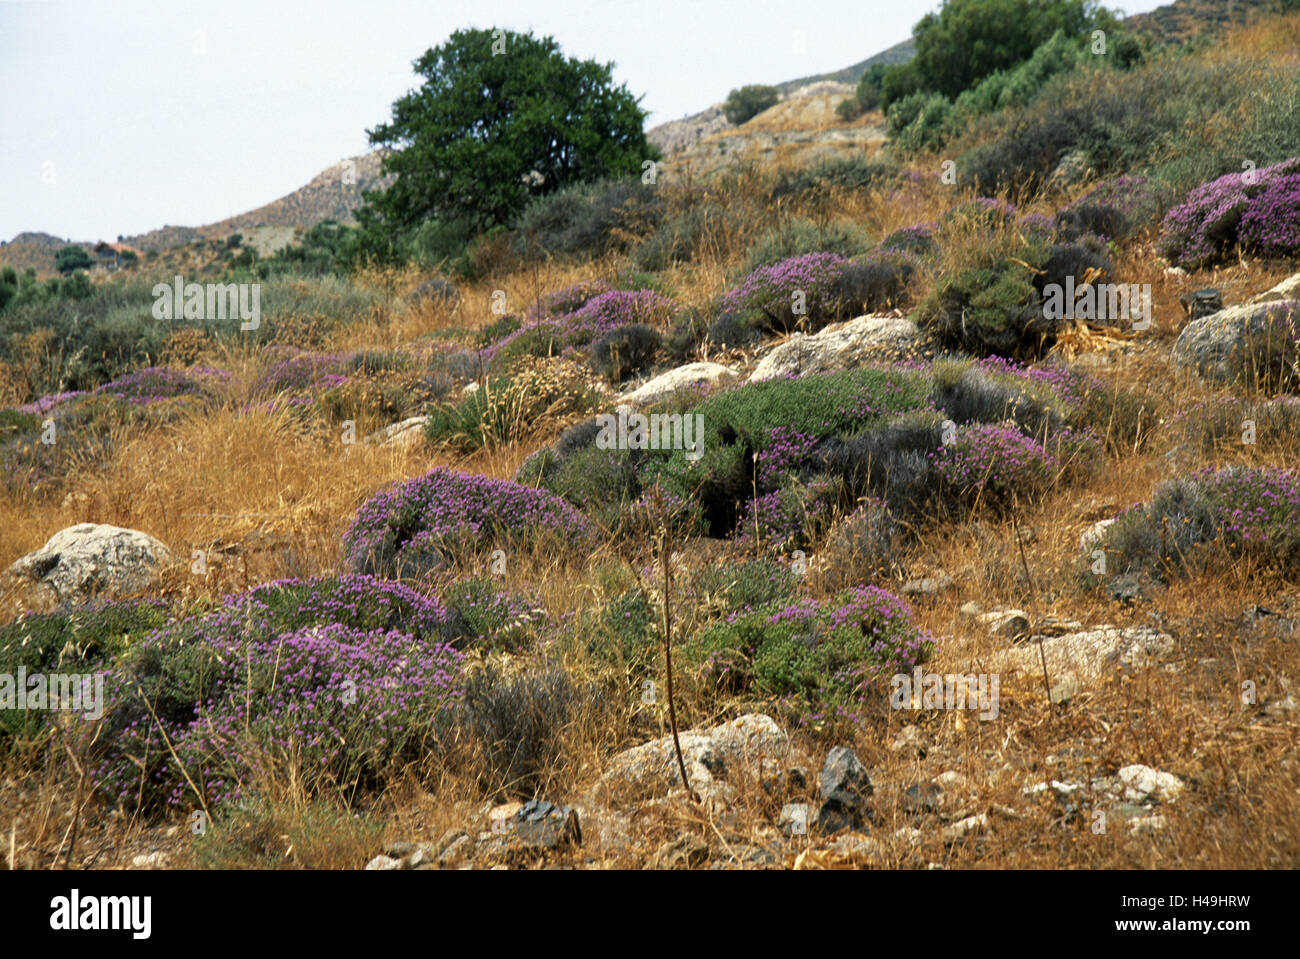 Grecia, Creta, Kamilari, montaña, tomillo, árboles Foto de stock